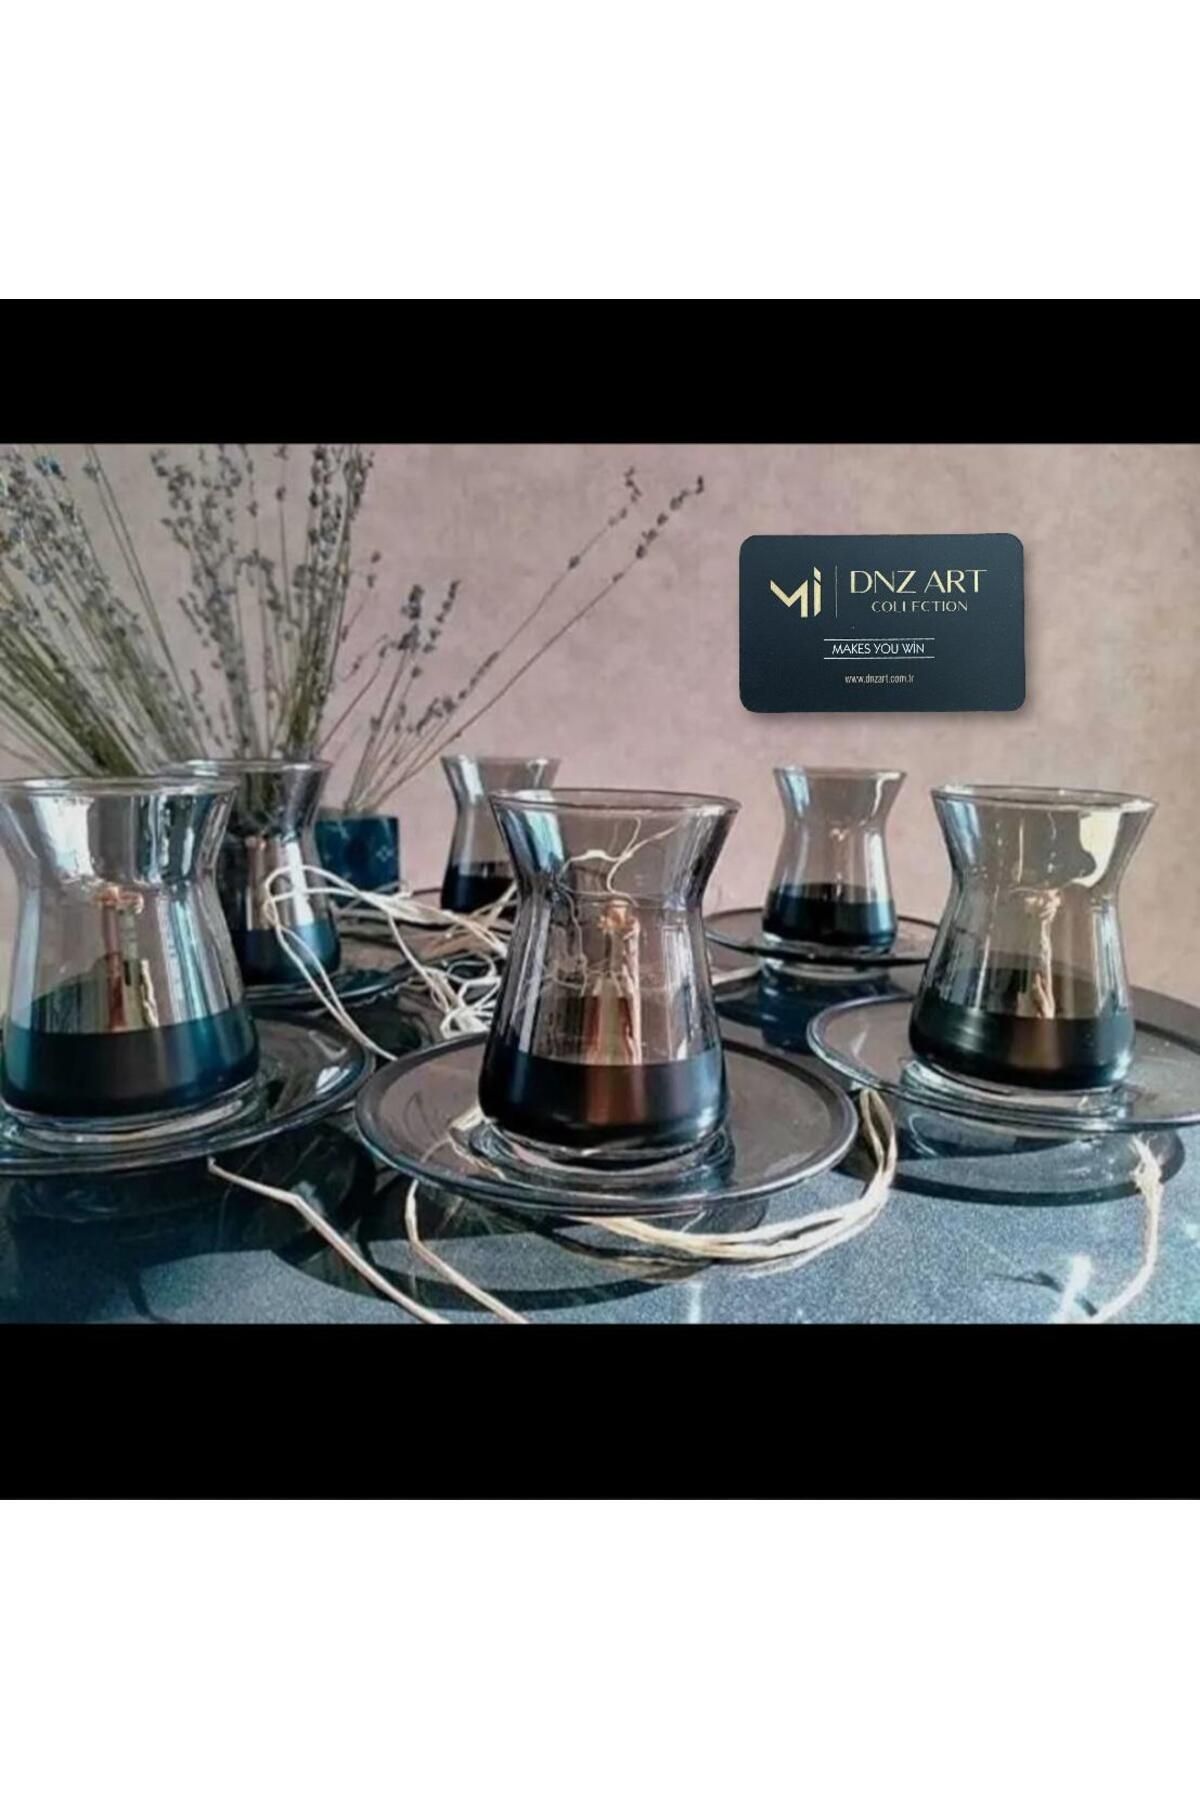 DNZ ART COLLECTİON Füme Siyah Renk Çay Seti 12 prç Çay Bardağı Takımı